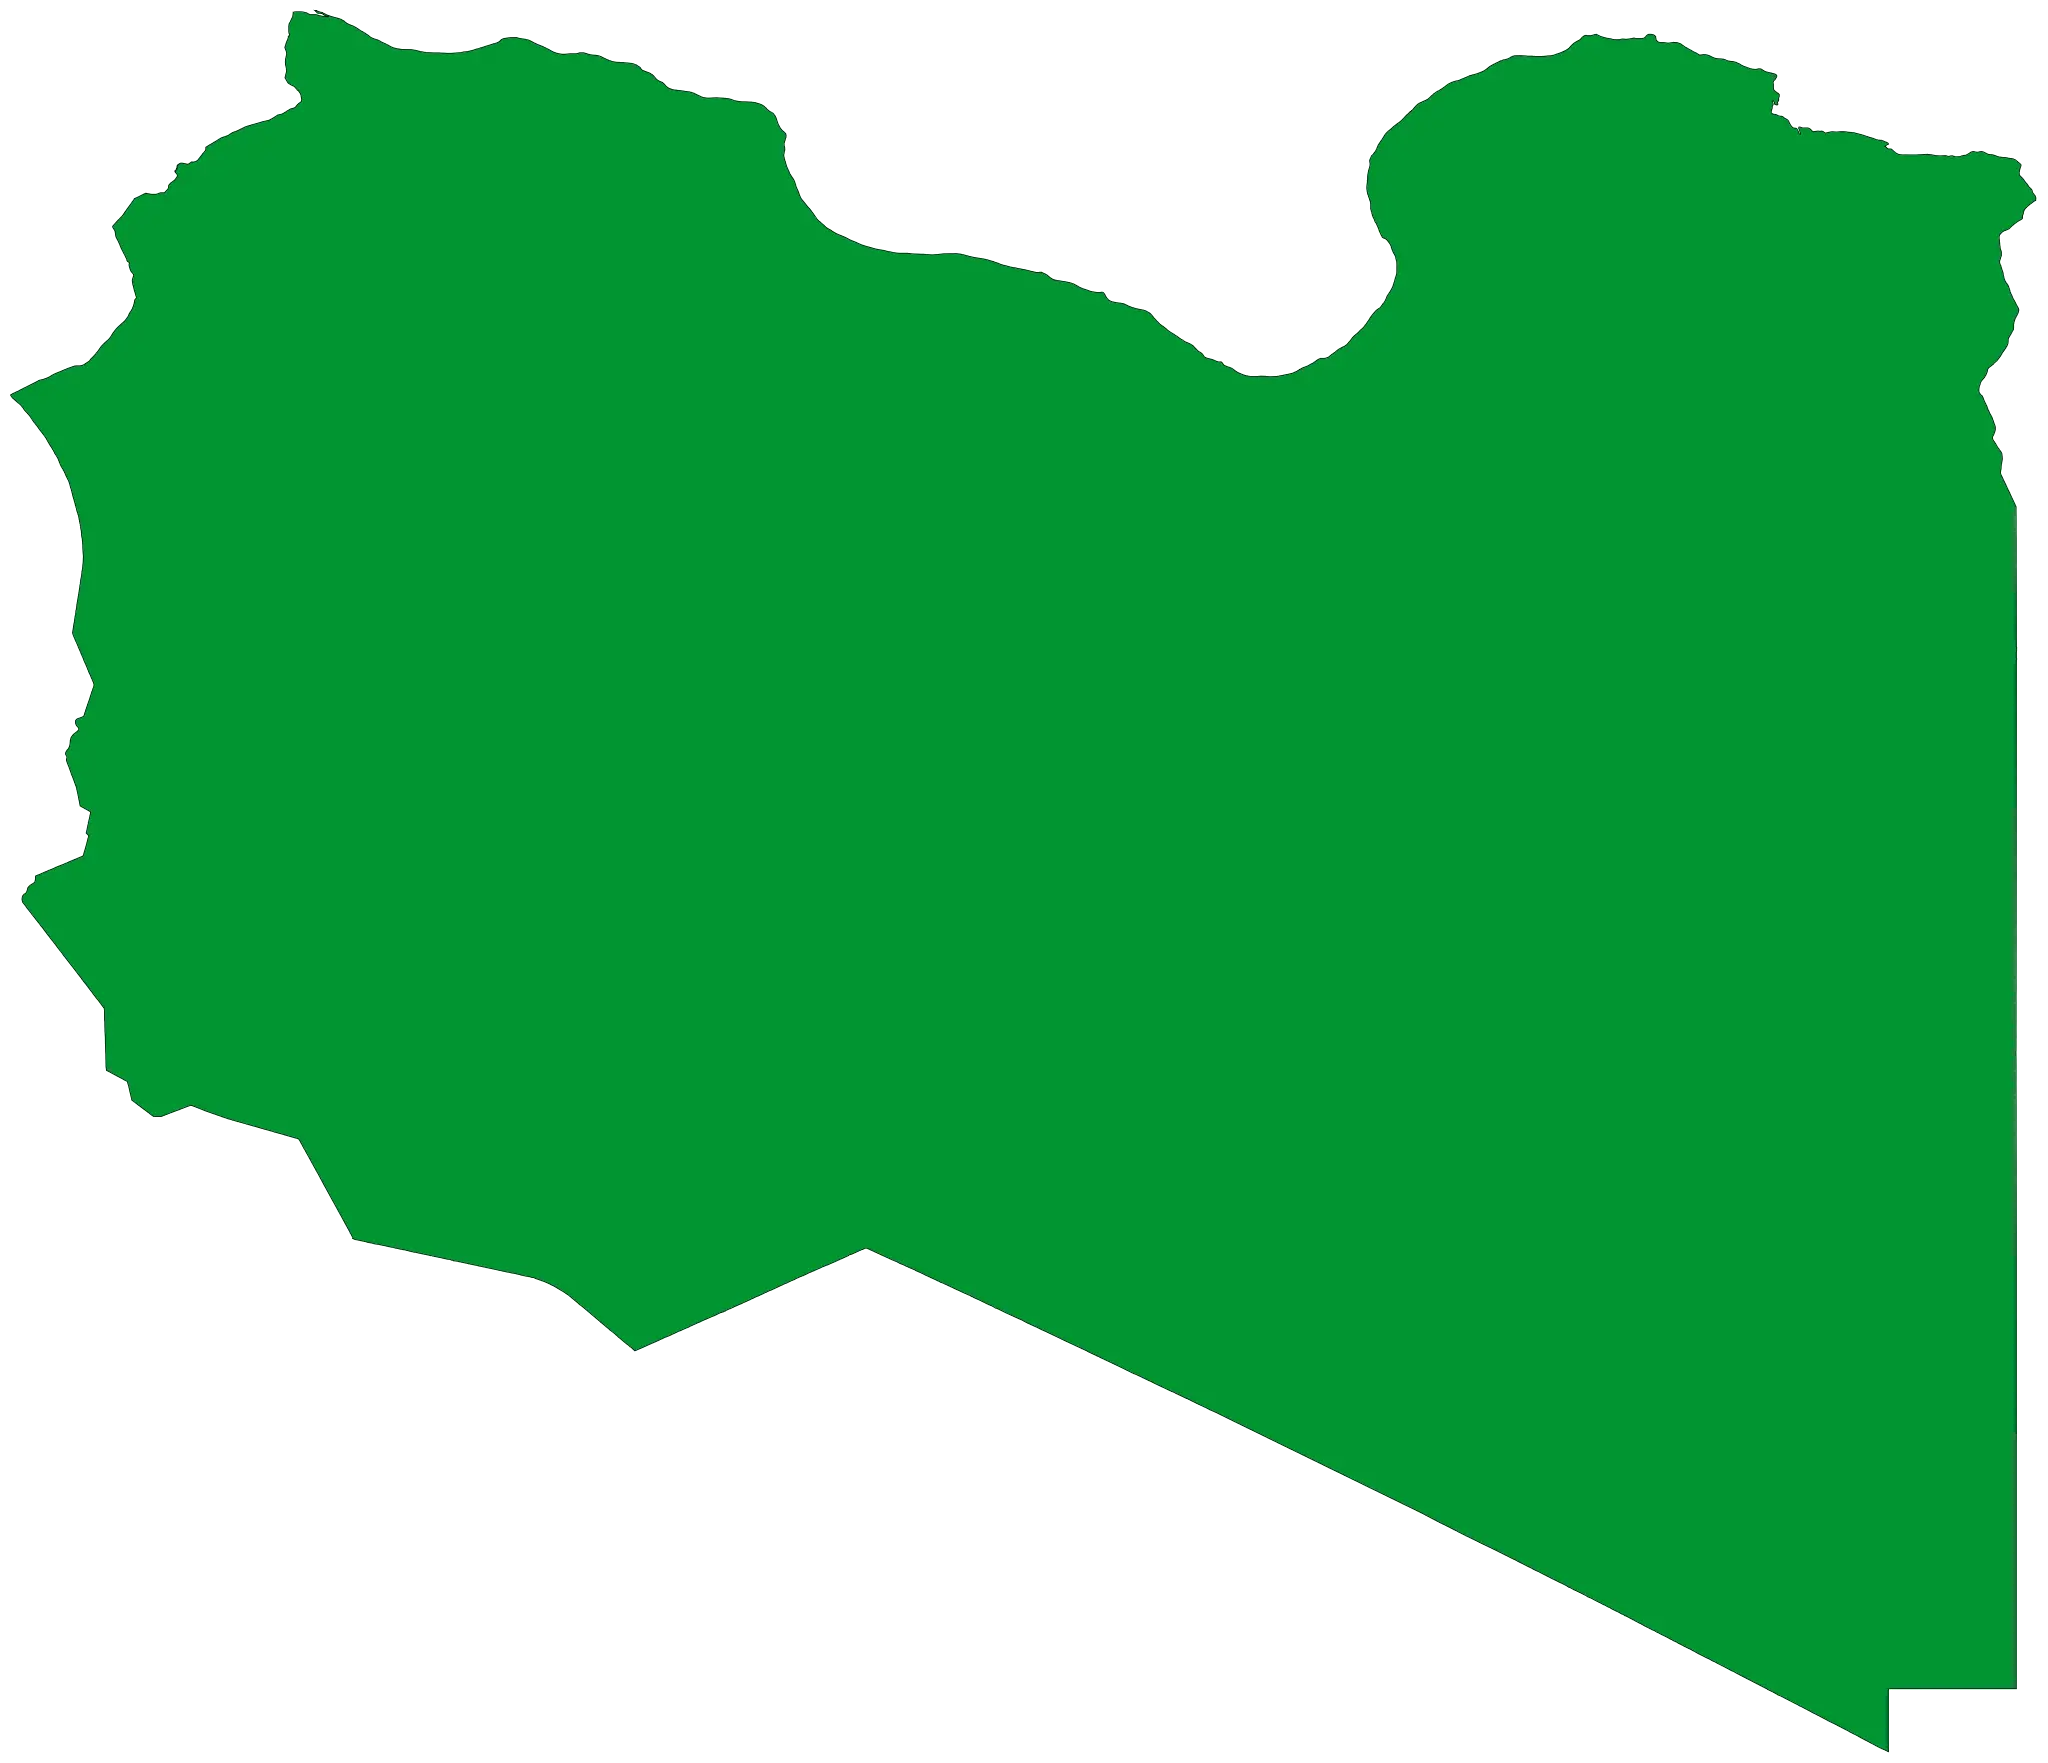 Libya Flag Map